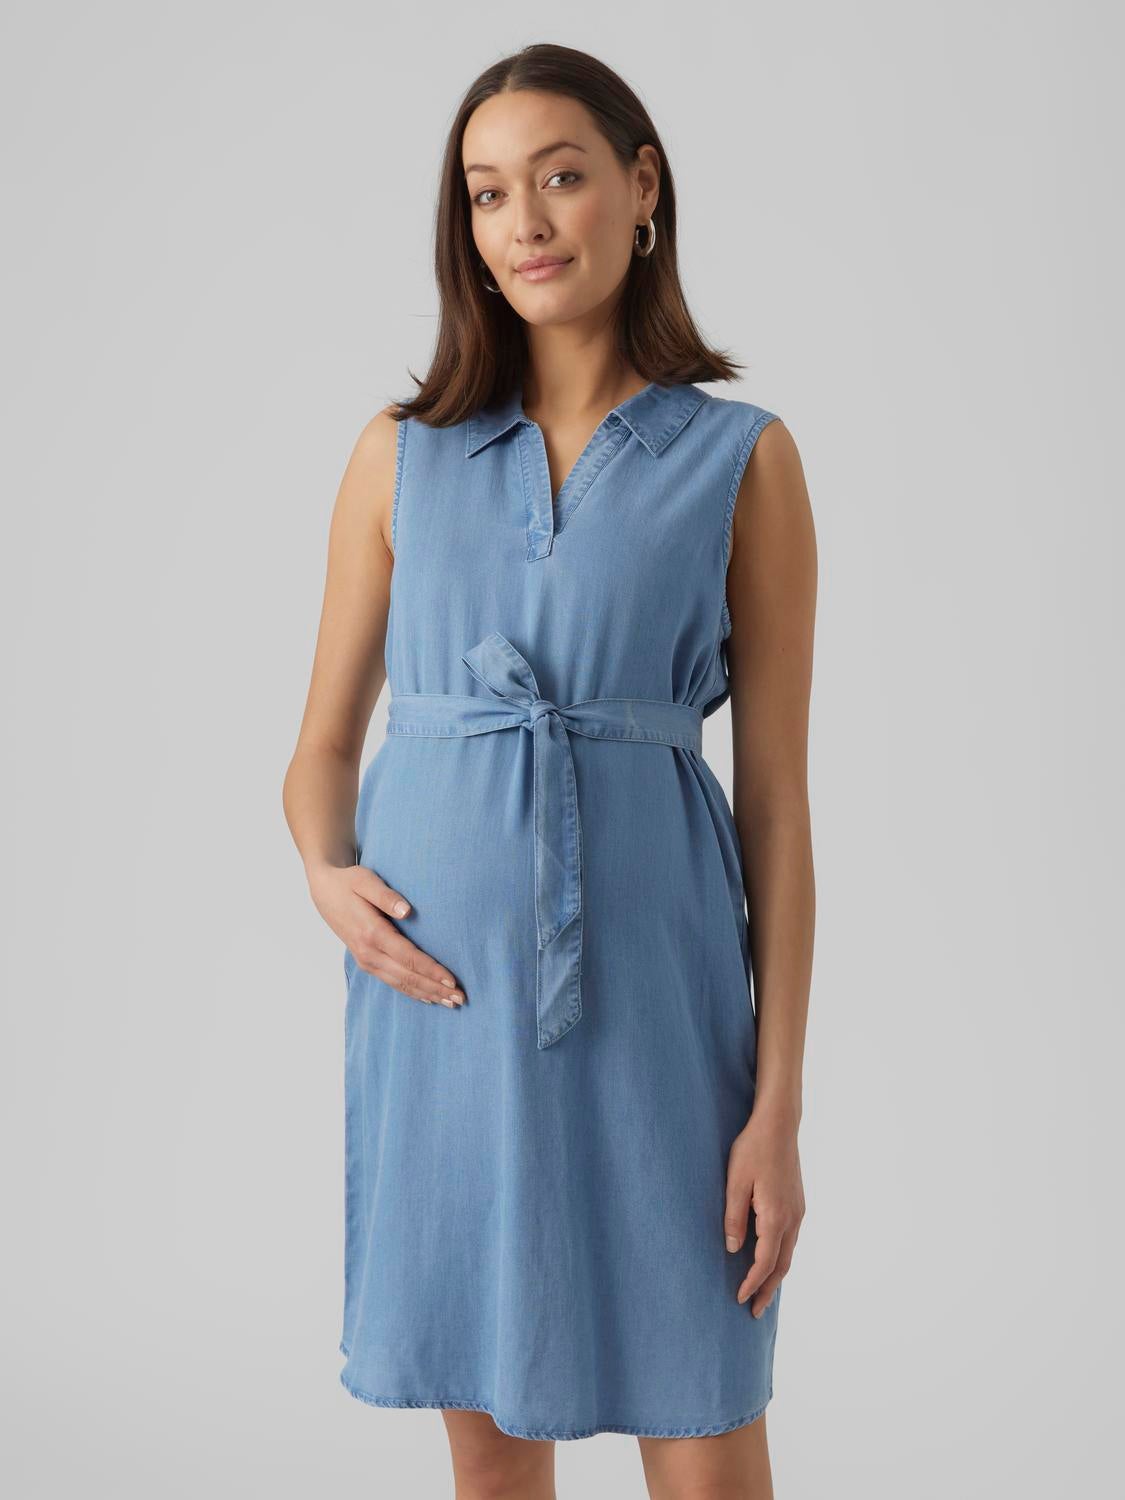 Flutter And Kick Womens Denim Maternity Dress Size Medium New with tags |  eBay